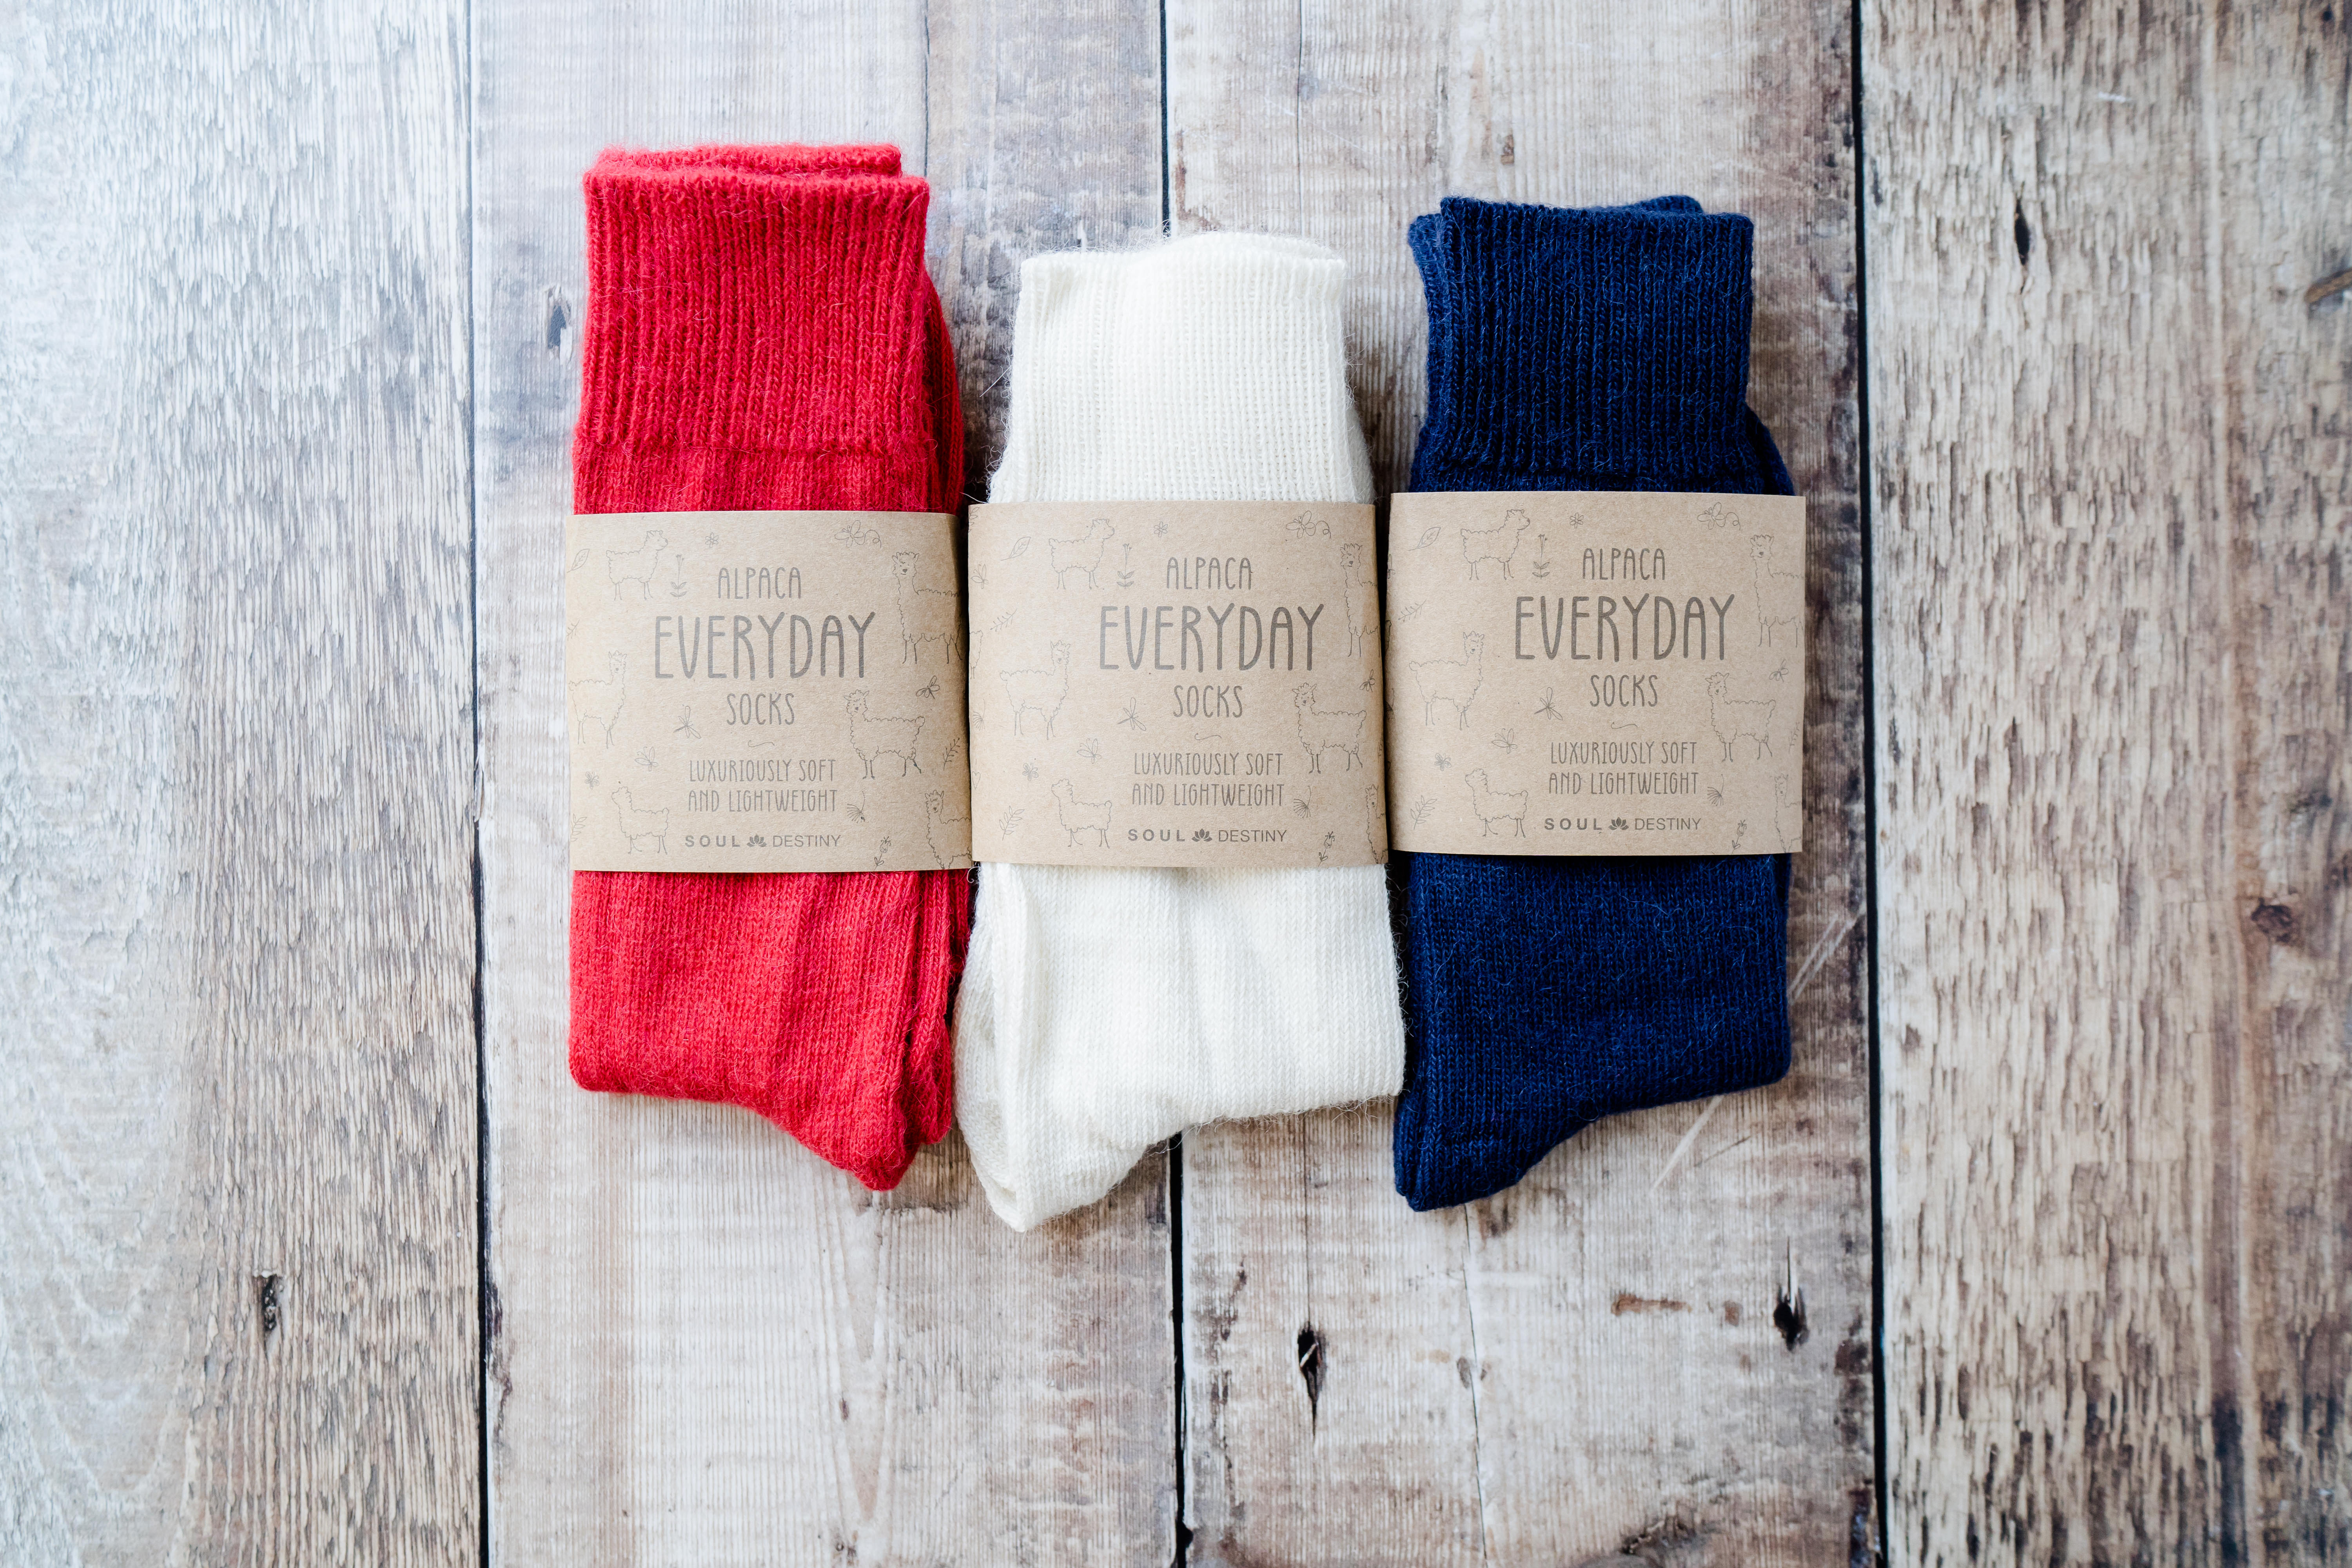 Gift Pack Idea L 3 pairs of Alpaca Every Day Socks, 55% Alpaca Wool